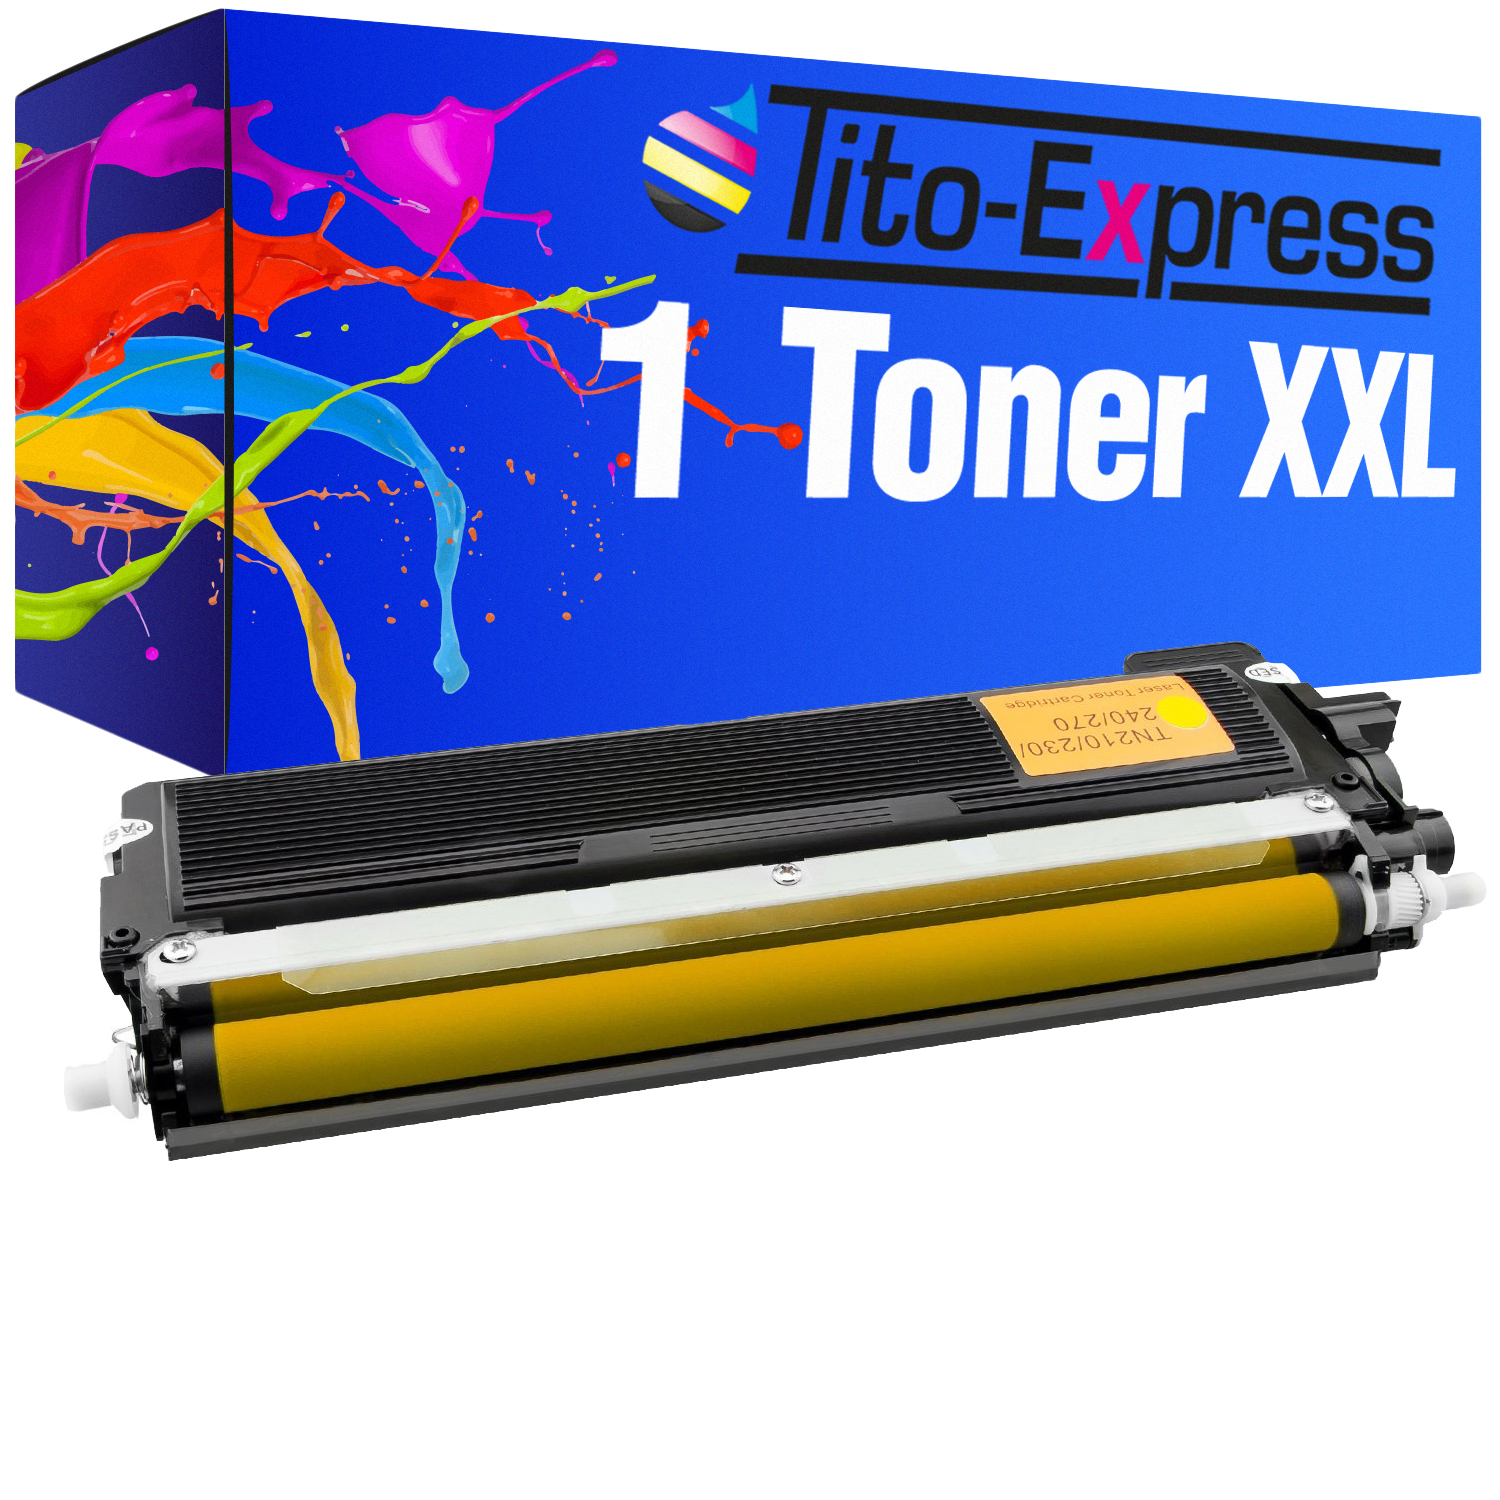 TITO-EXPRESS PLATINUMSERIE 1 Toner TN-230 (TN230) Toner XXL yellow ersetzt Brother